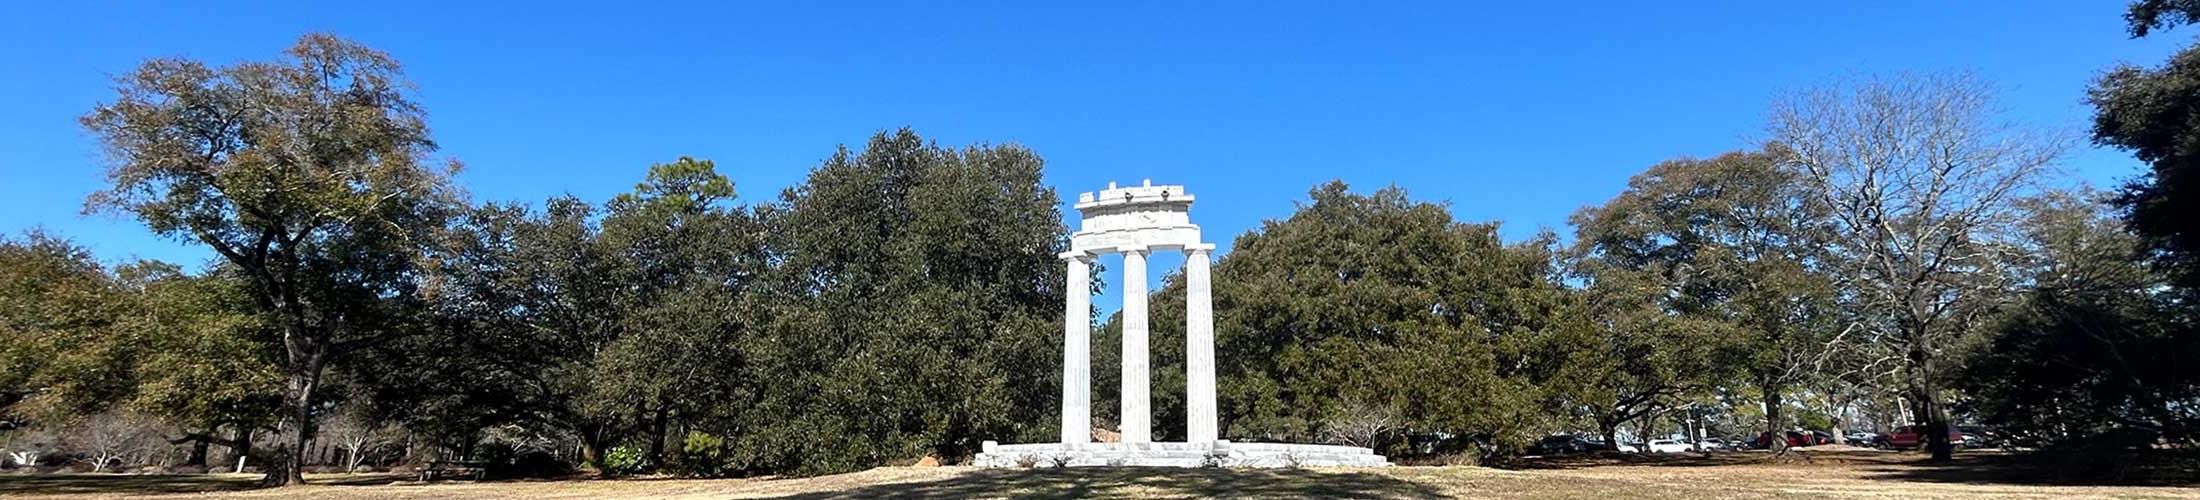 Tholos Delphi statue on campus.